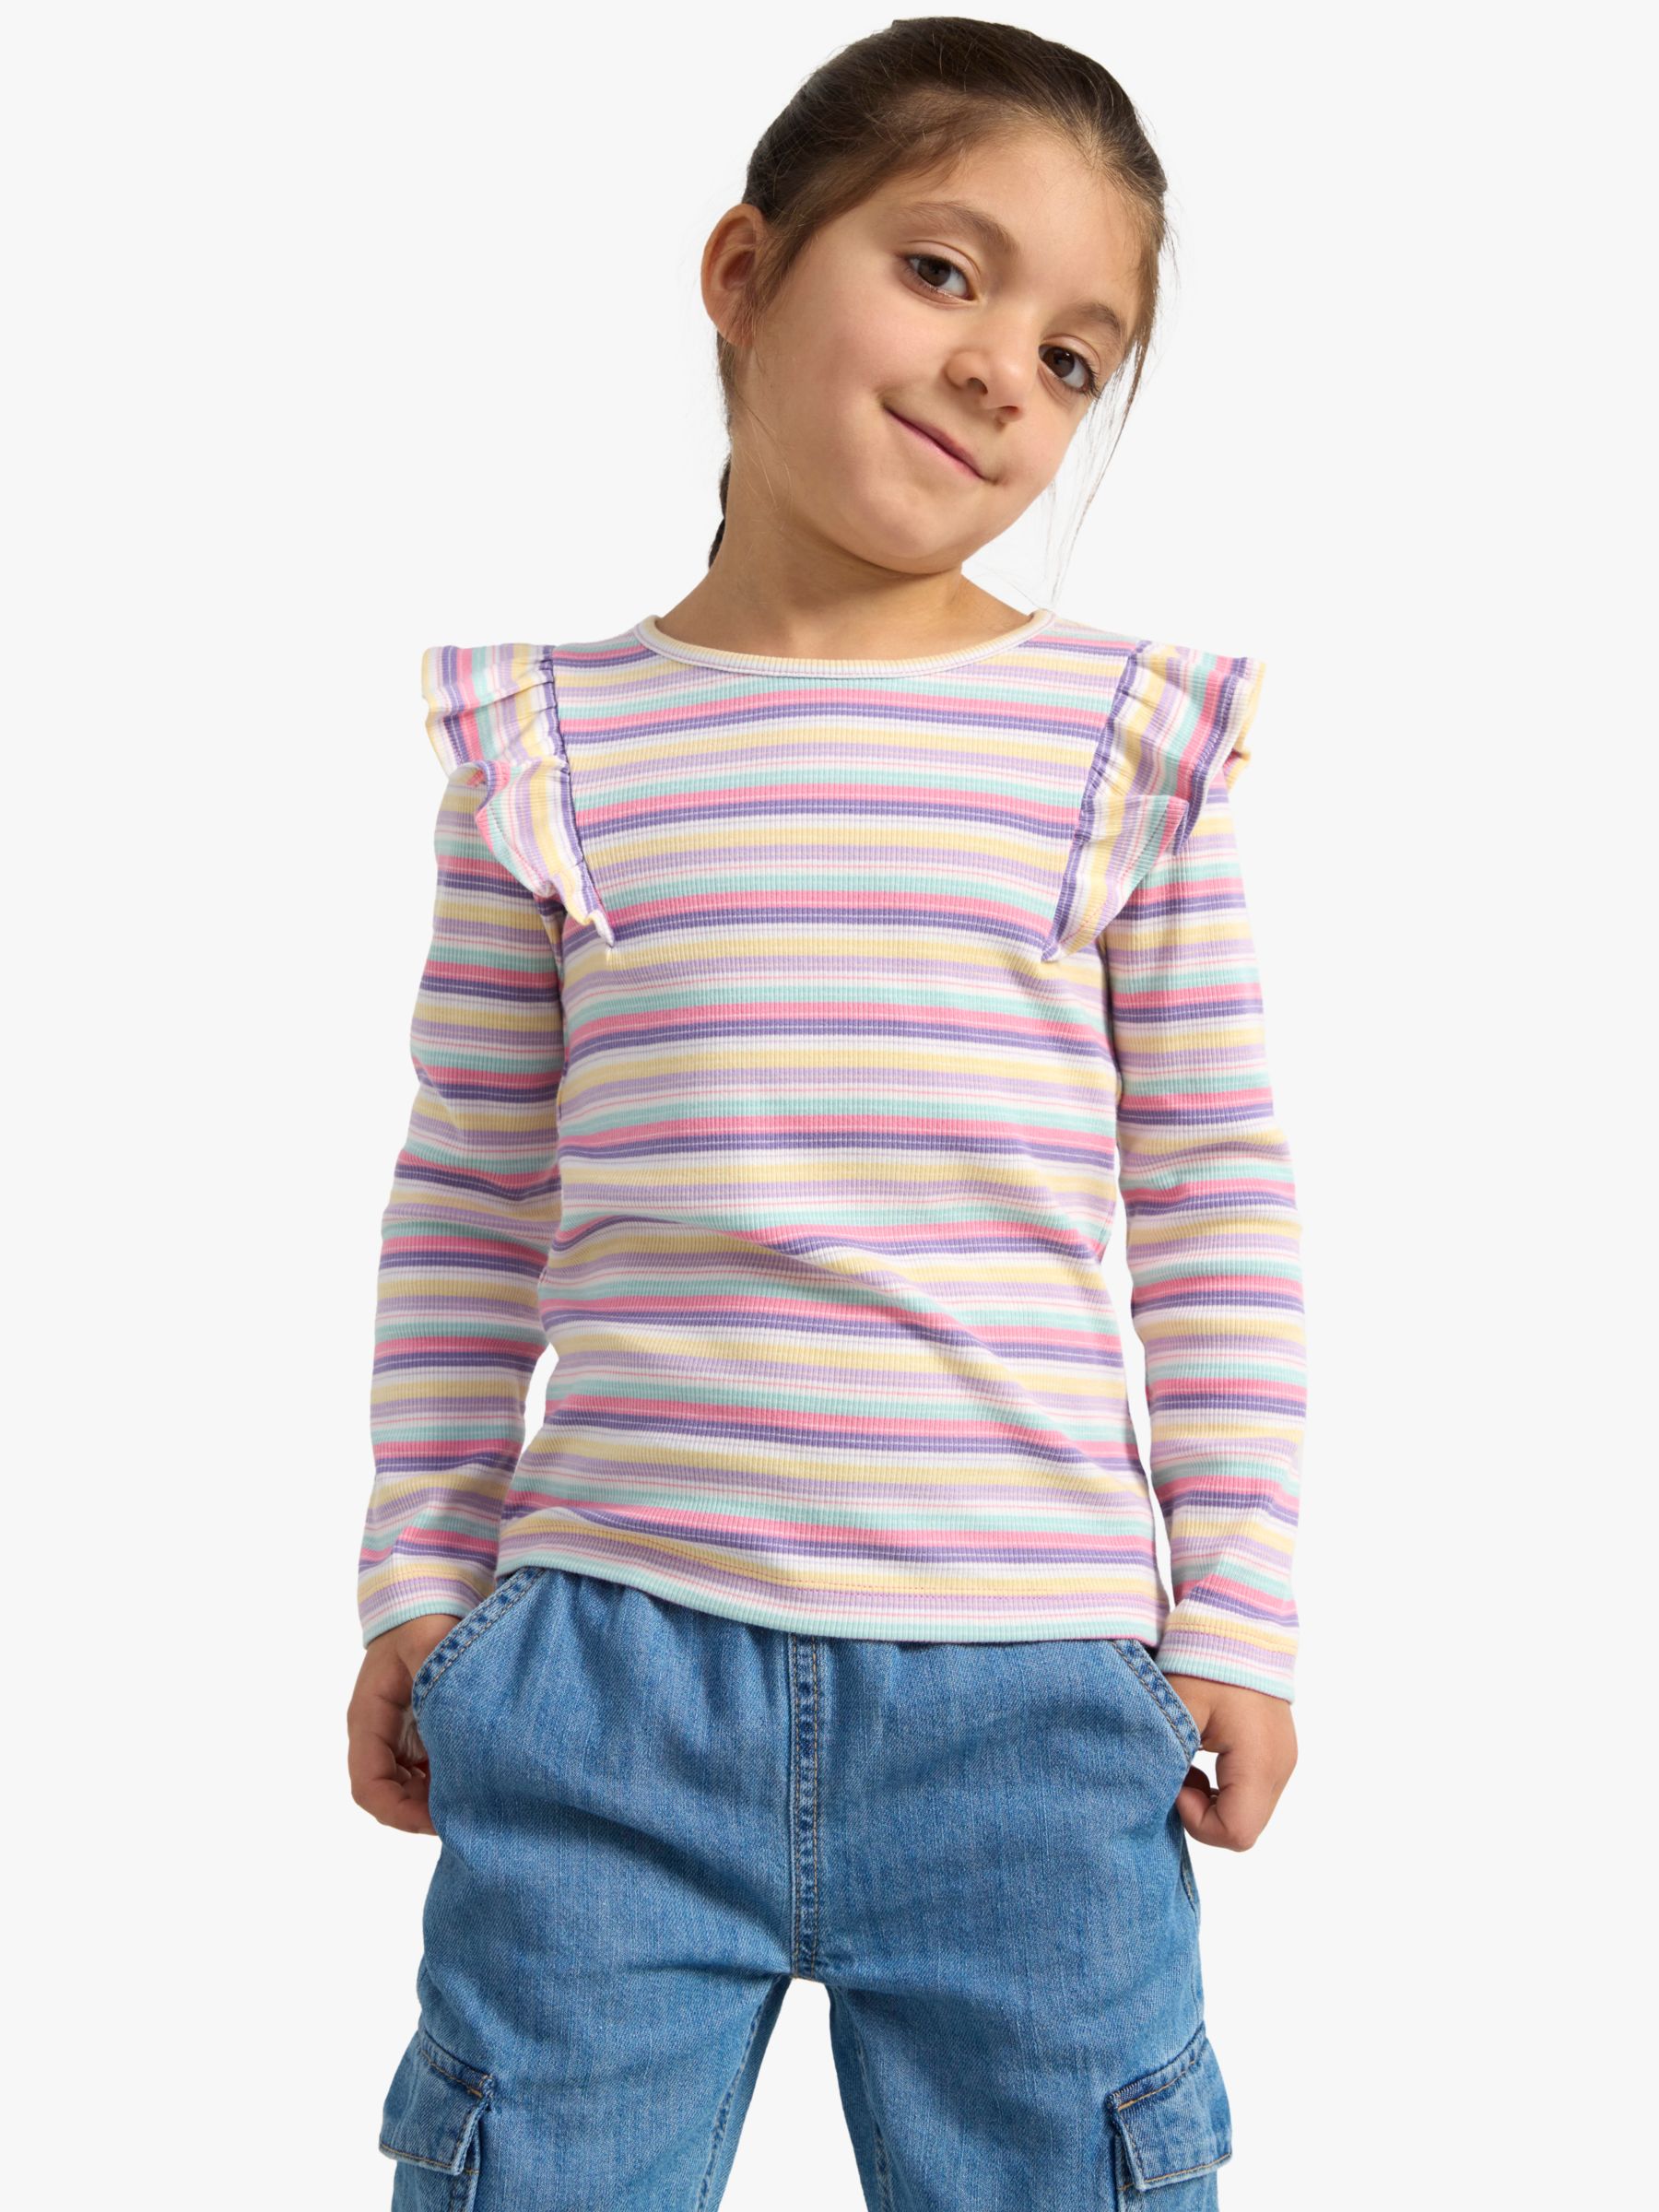 Lindex Kids' Organic Cotton Blend Stripe Frill Detail Top, Pink, 18-24 months